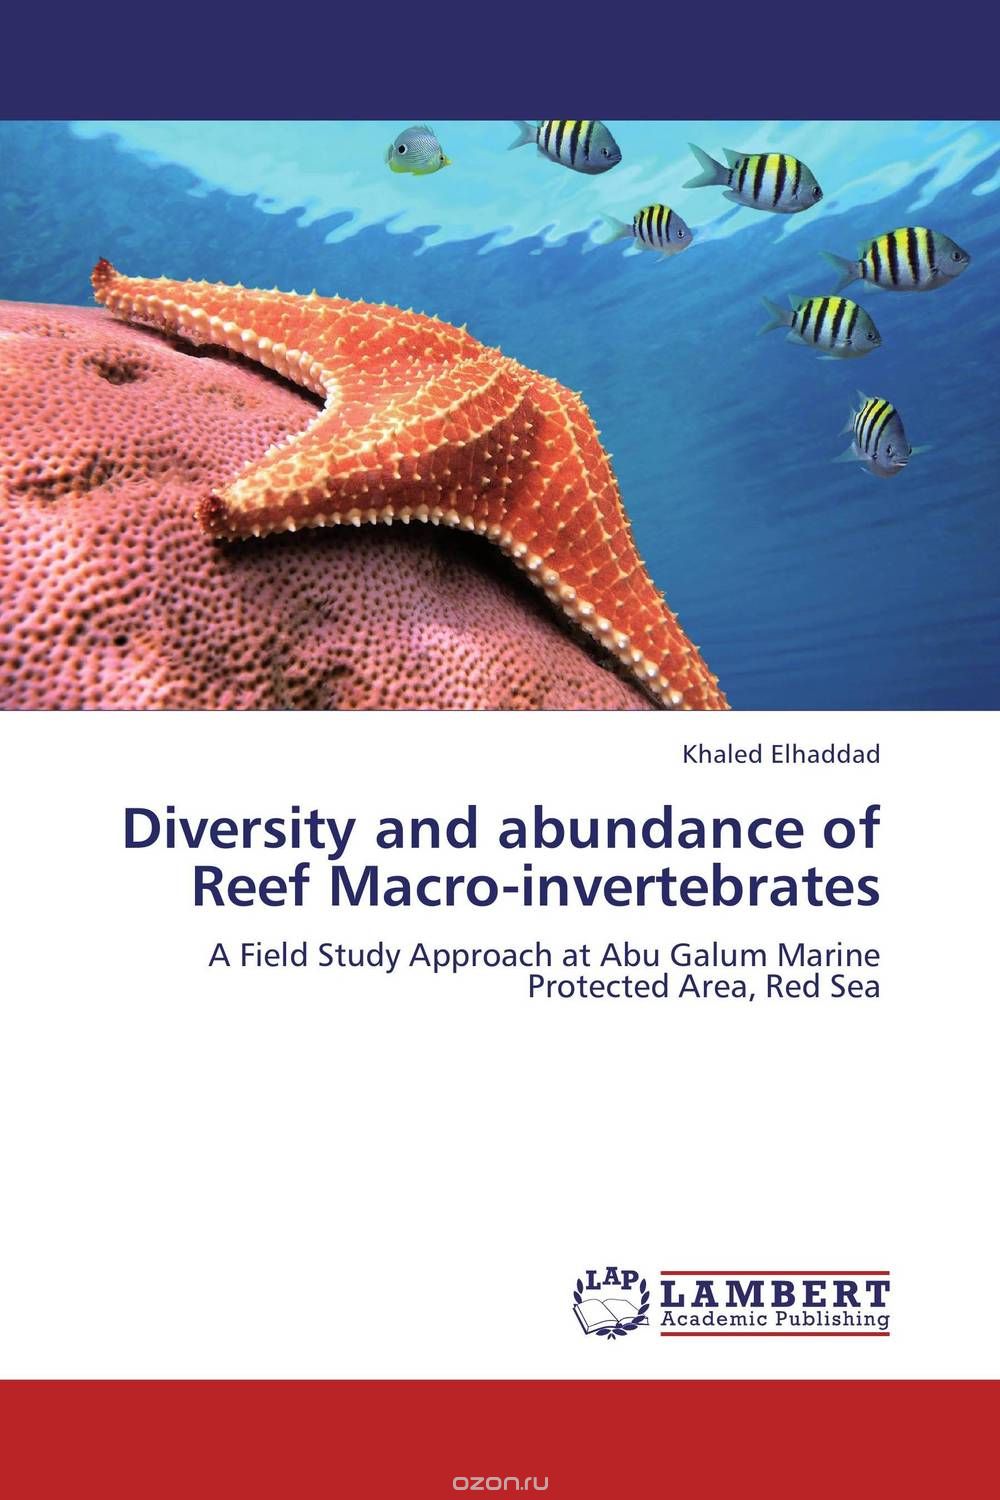 Скачать книгу "Diversity and abundance of Reef Macro-invertebrates"